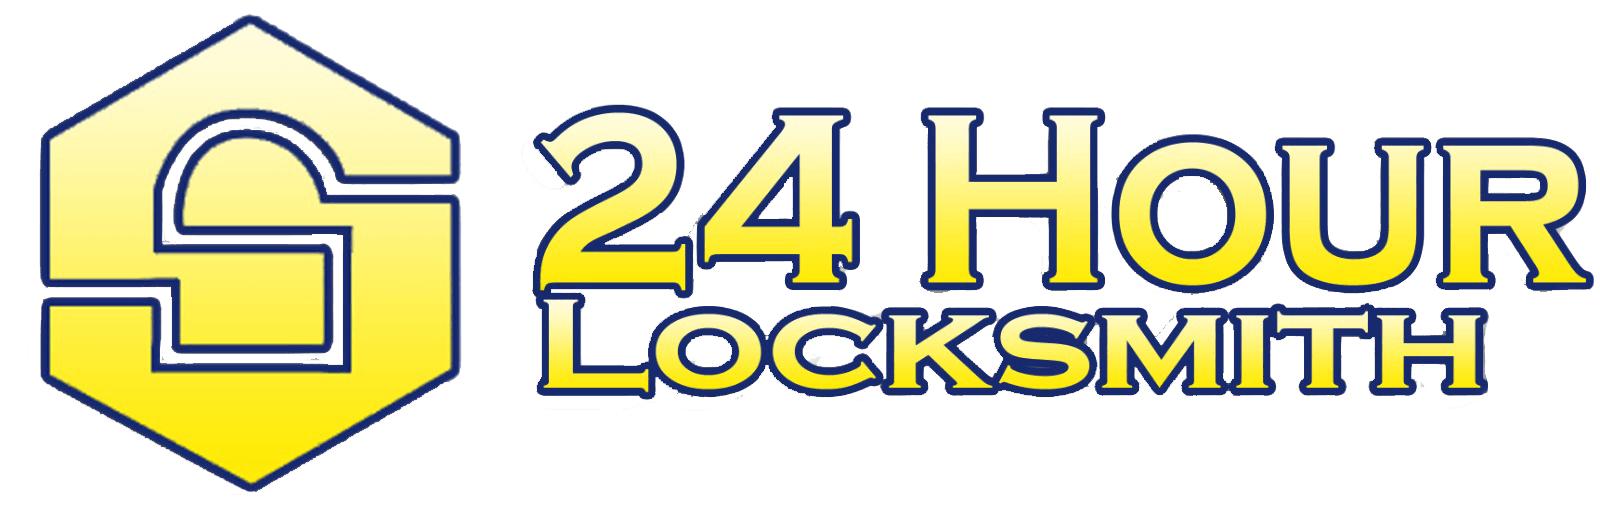 24 Hour Locksmith in Fort Worth, TX